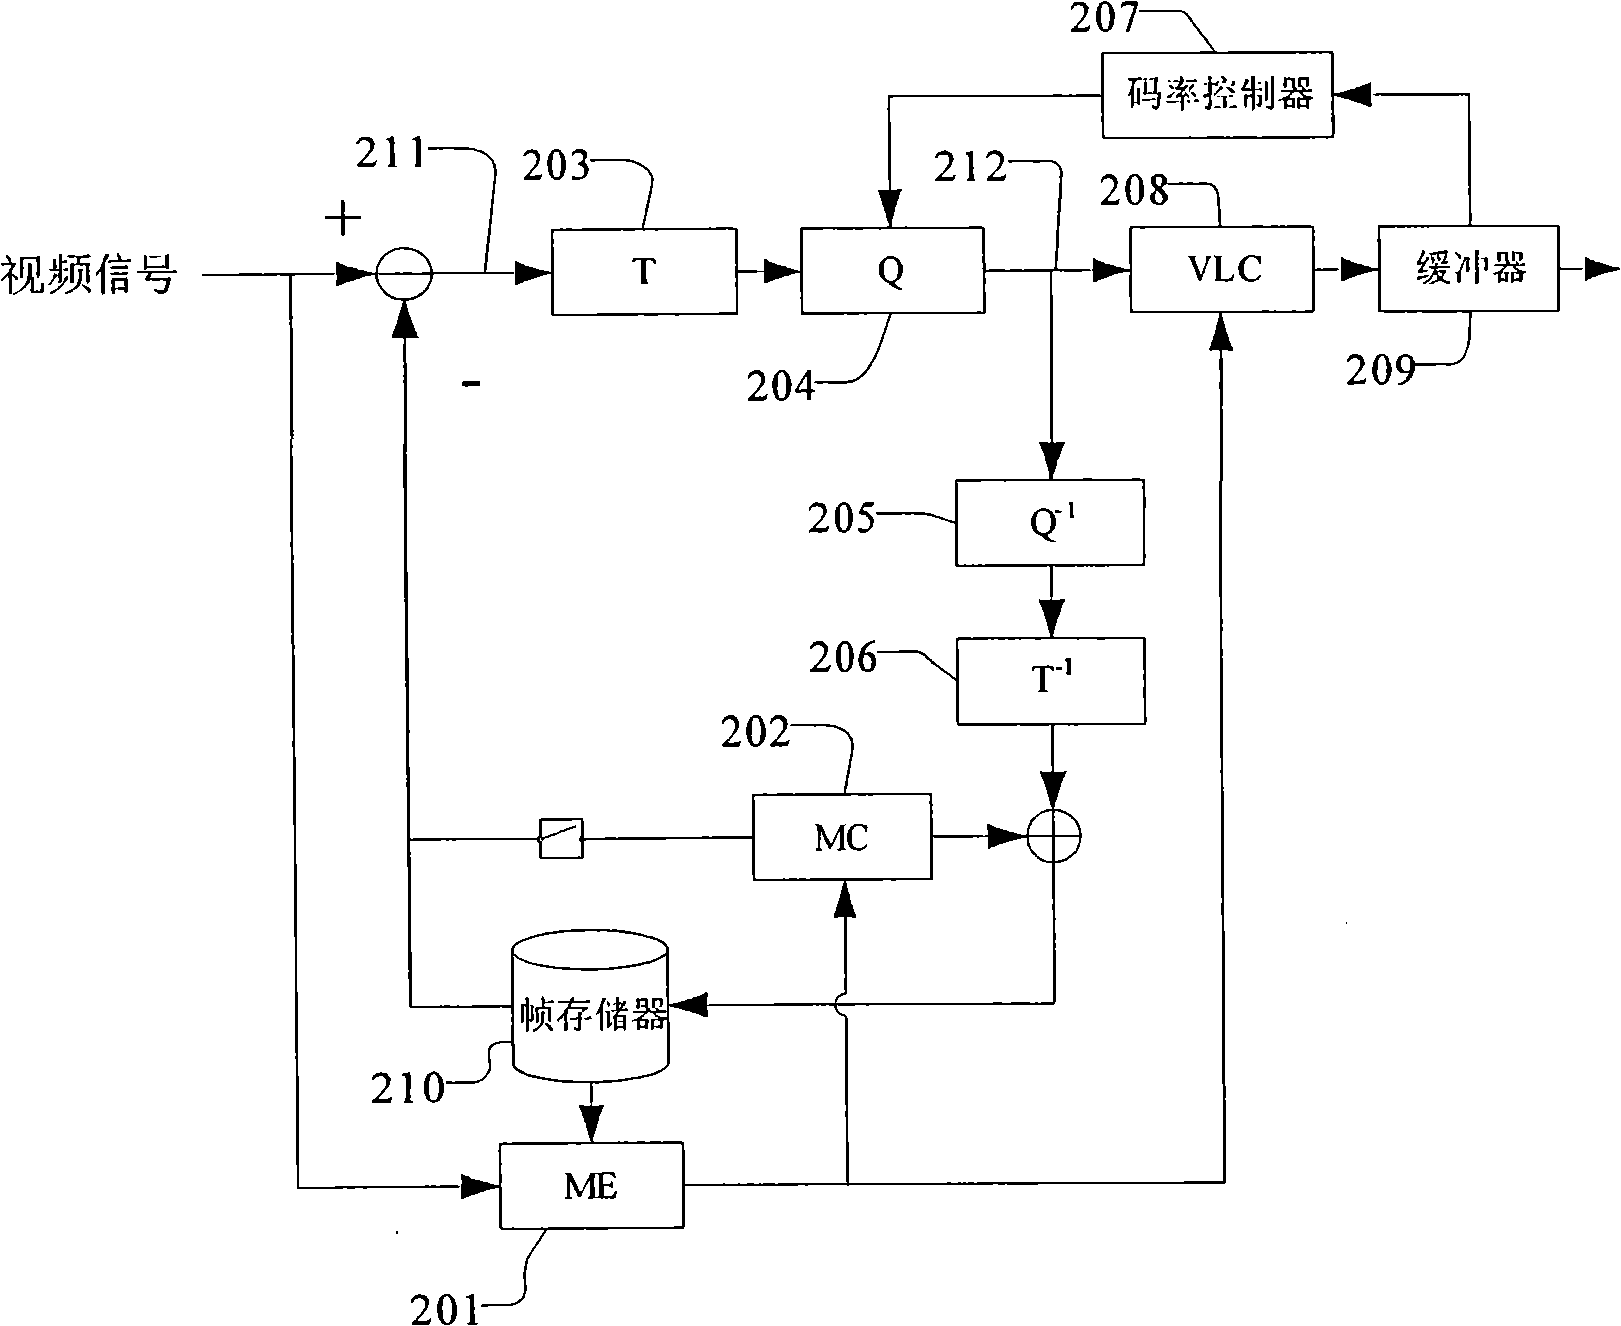 Motion vector estimating apparatus, encoder and camera